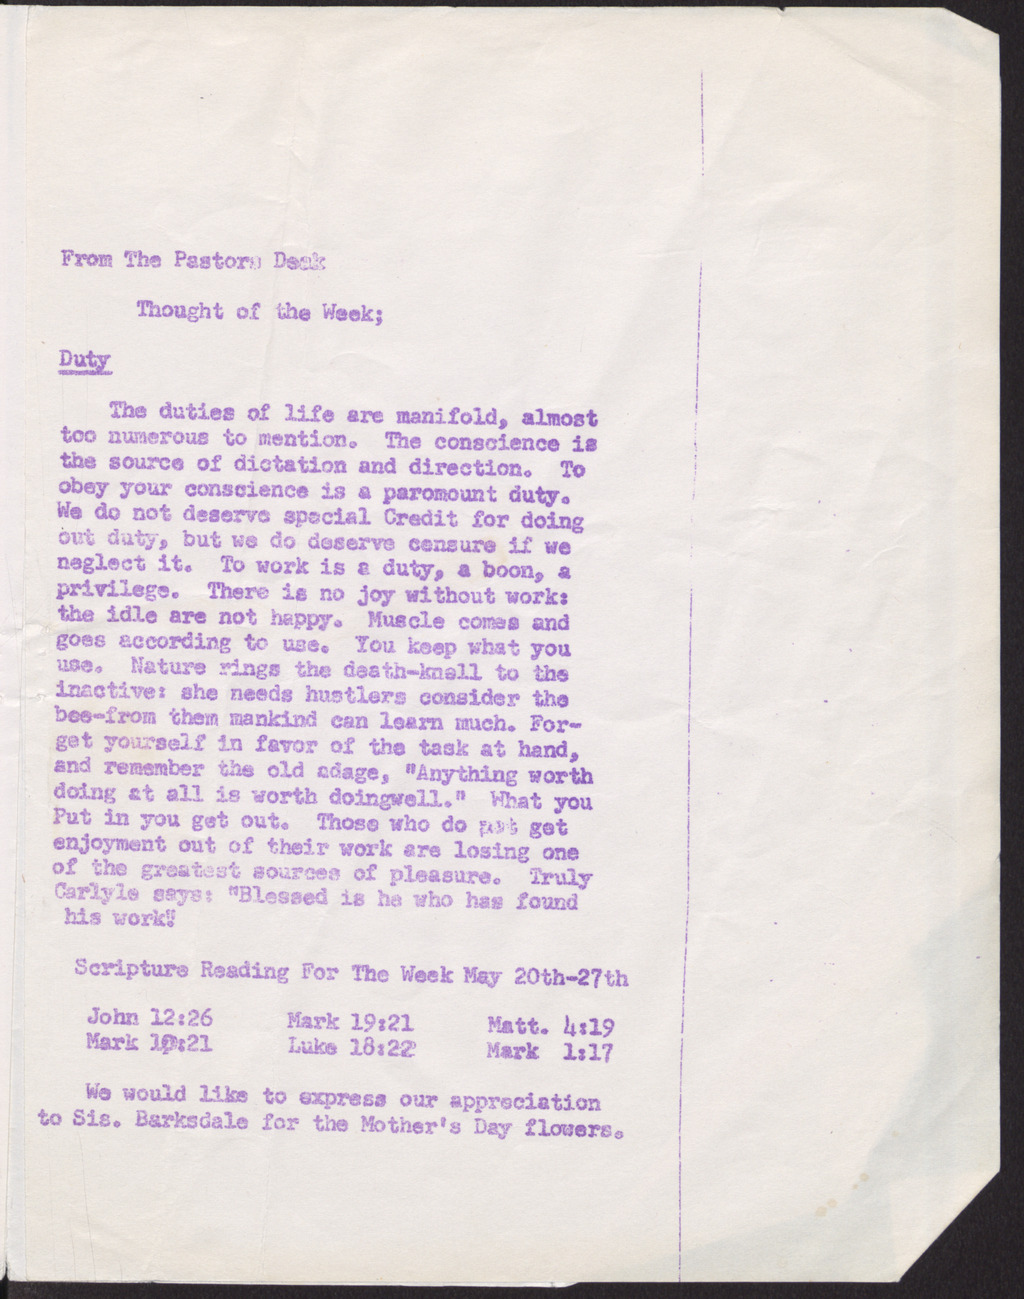 Church service program, [no month] 19, 1963 (5 images), page 5